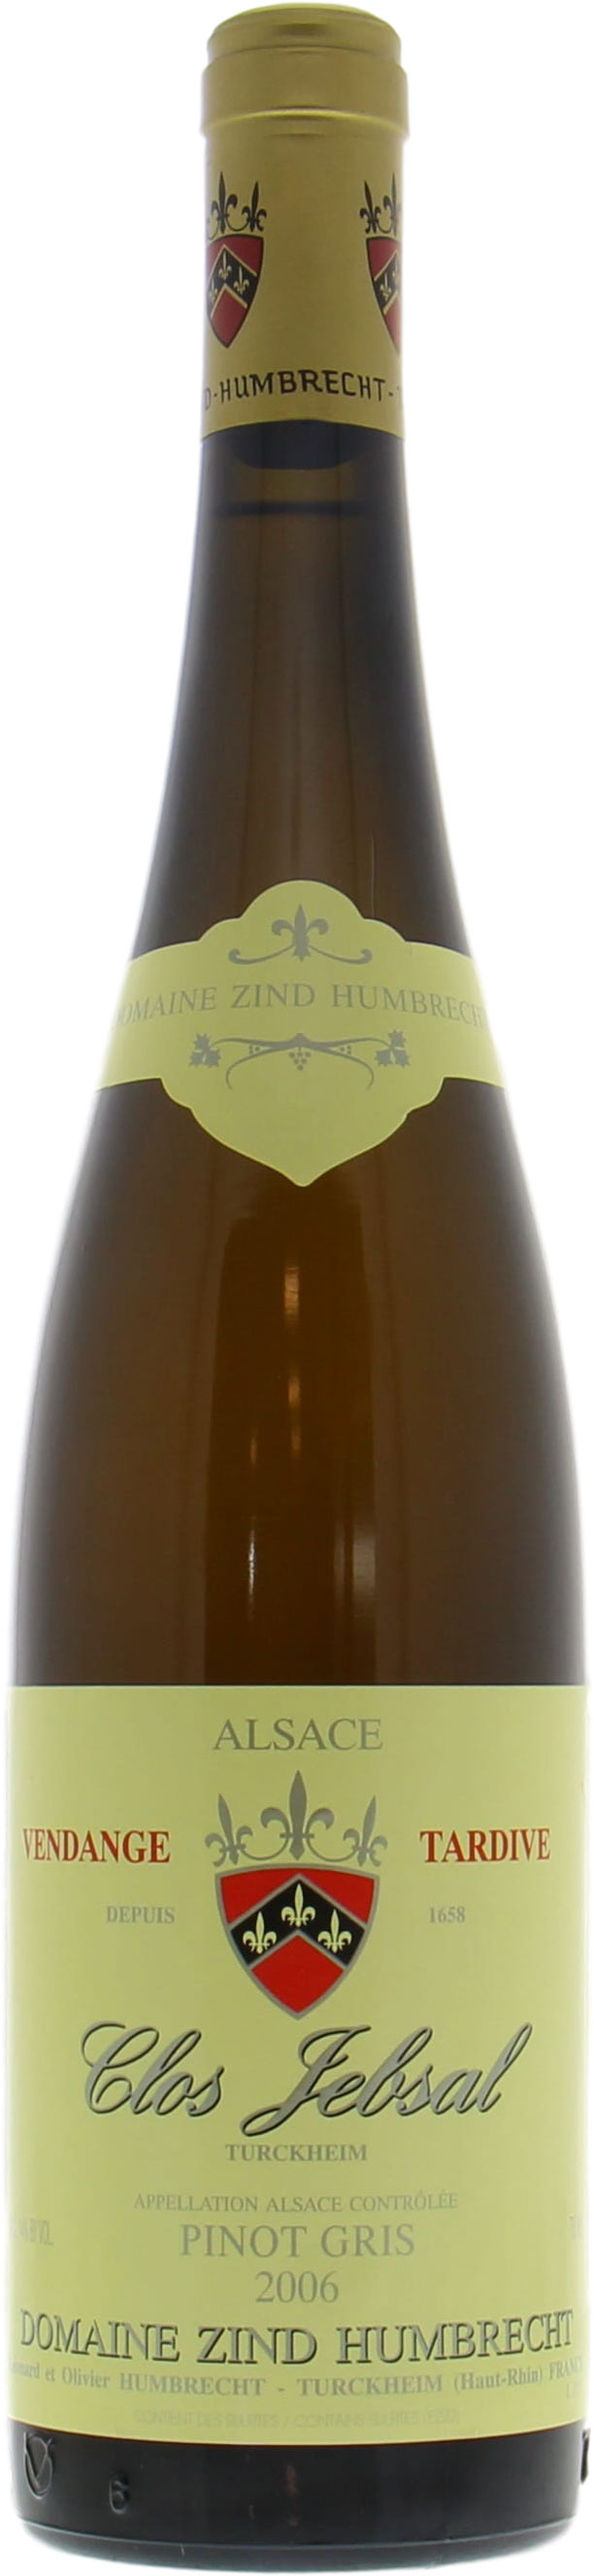 Zind Humbrecht - Pinot Gris Clos Jebsal Vendange Tardive 2006 Perfect